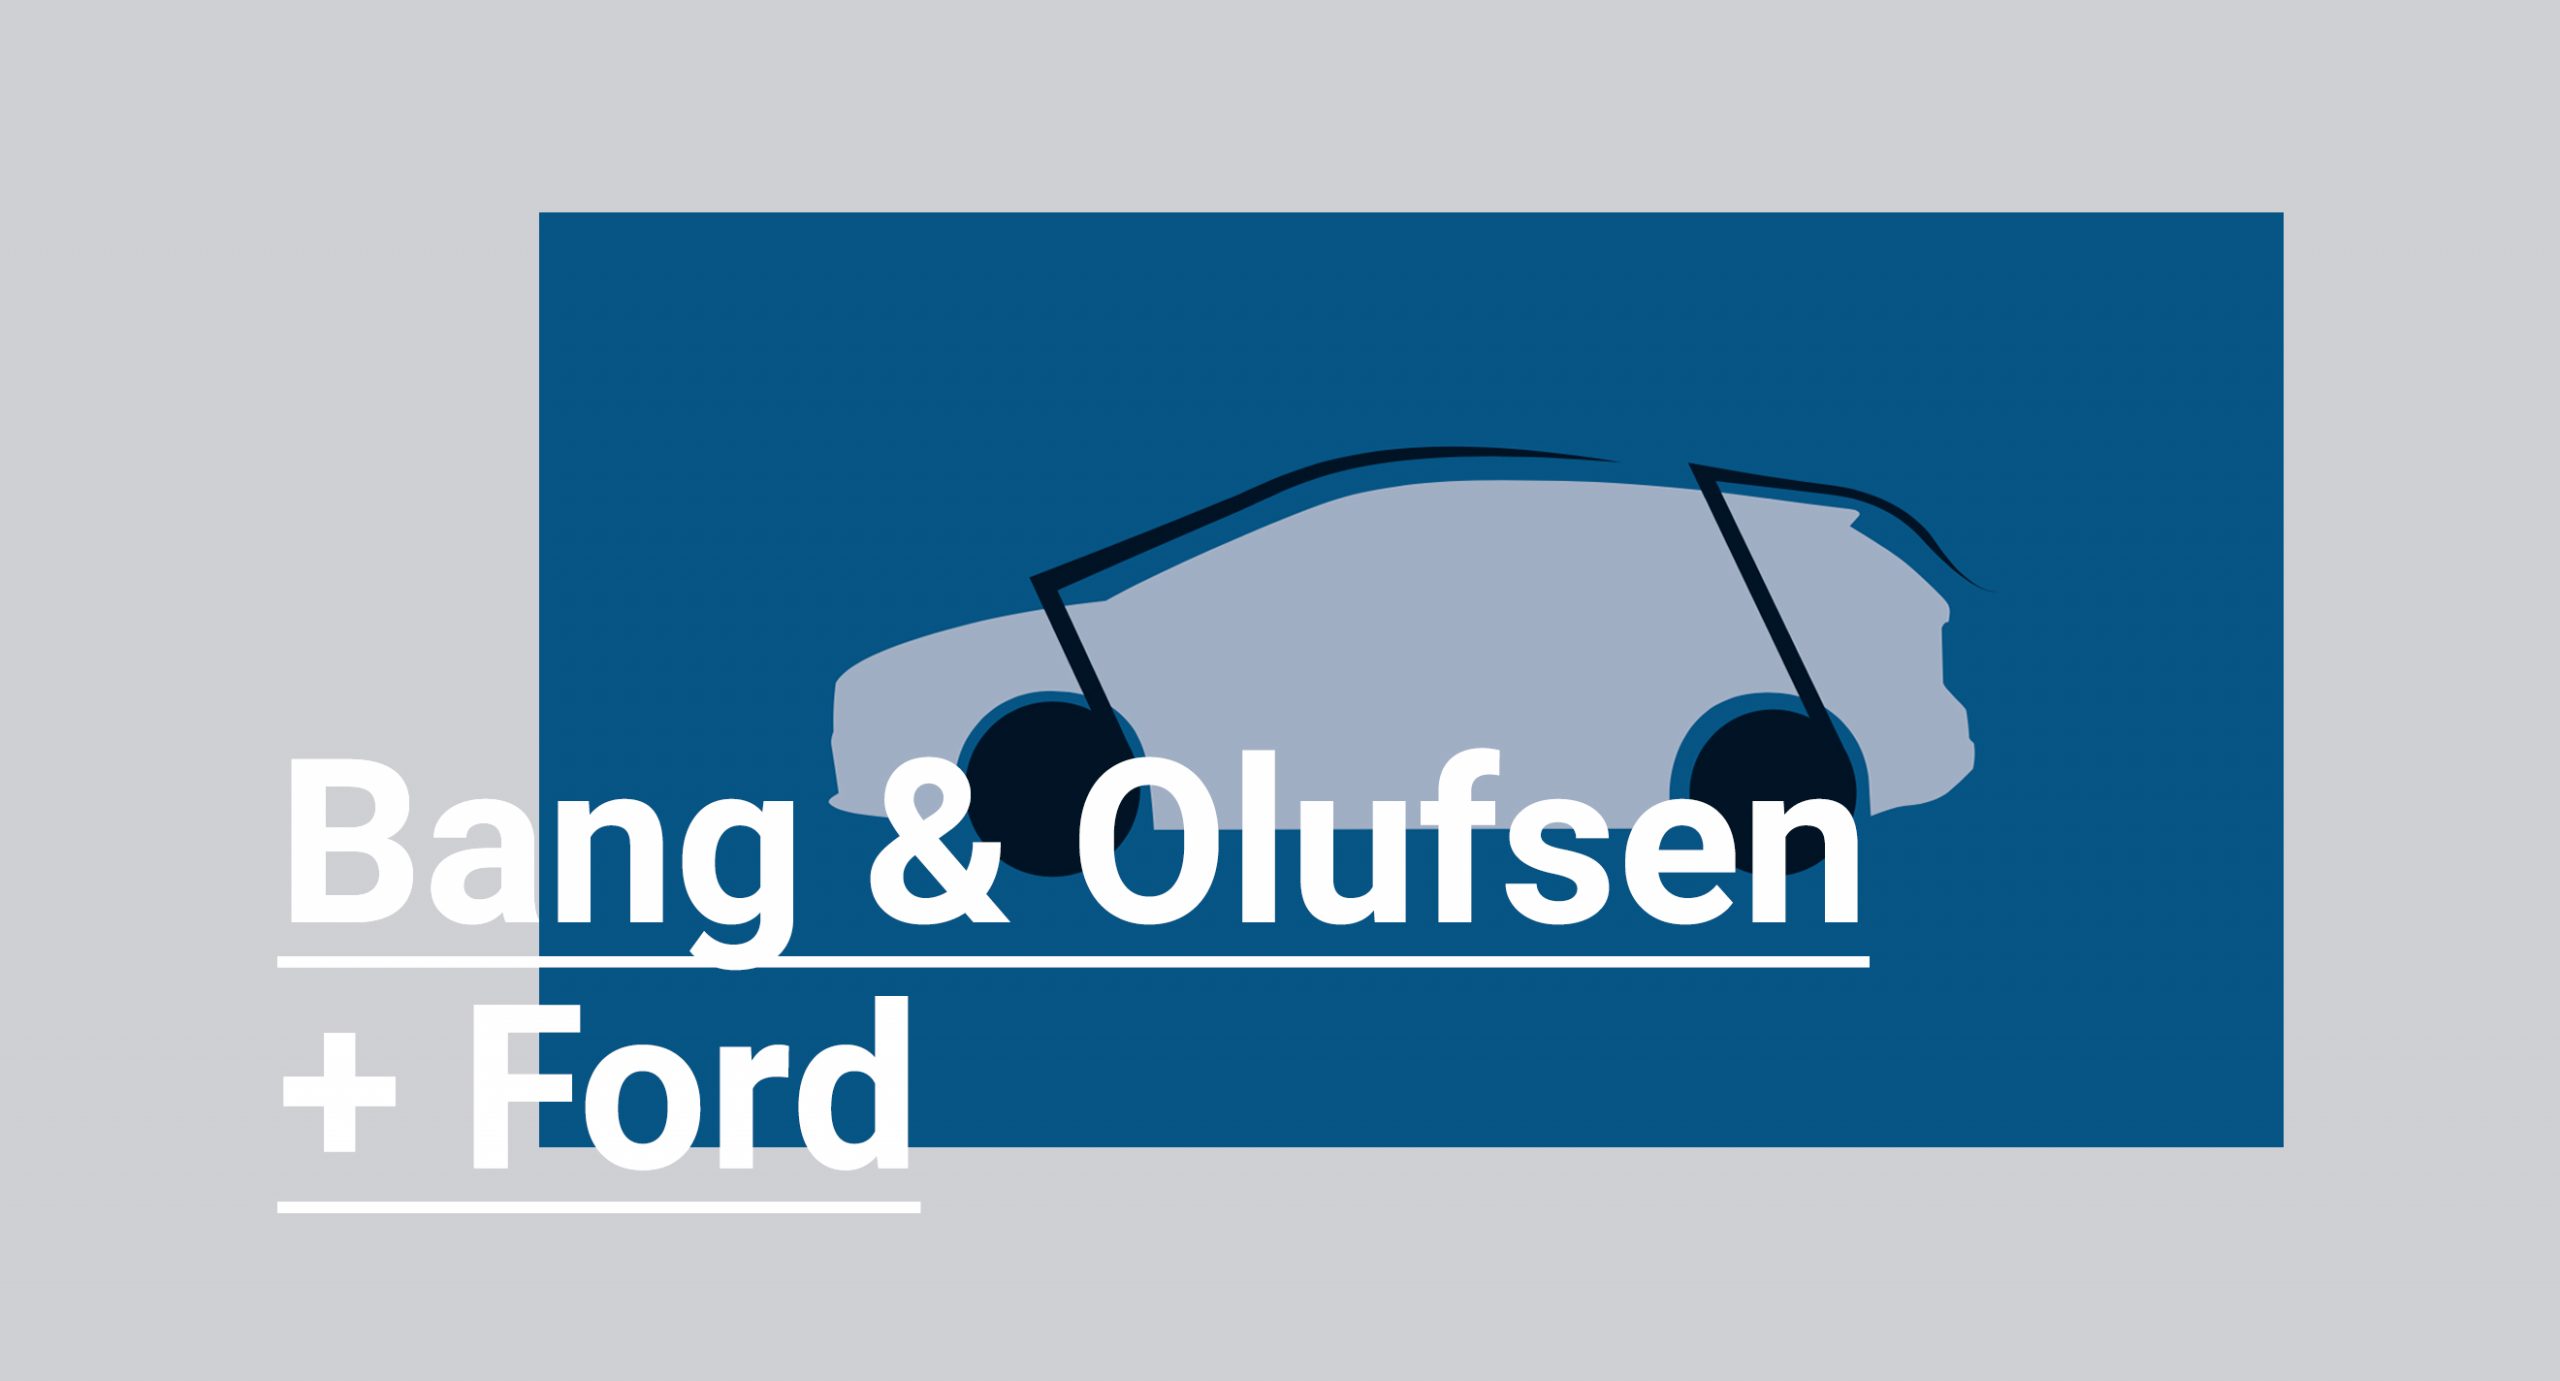 Bang & Olufsen + Ford